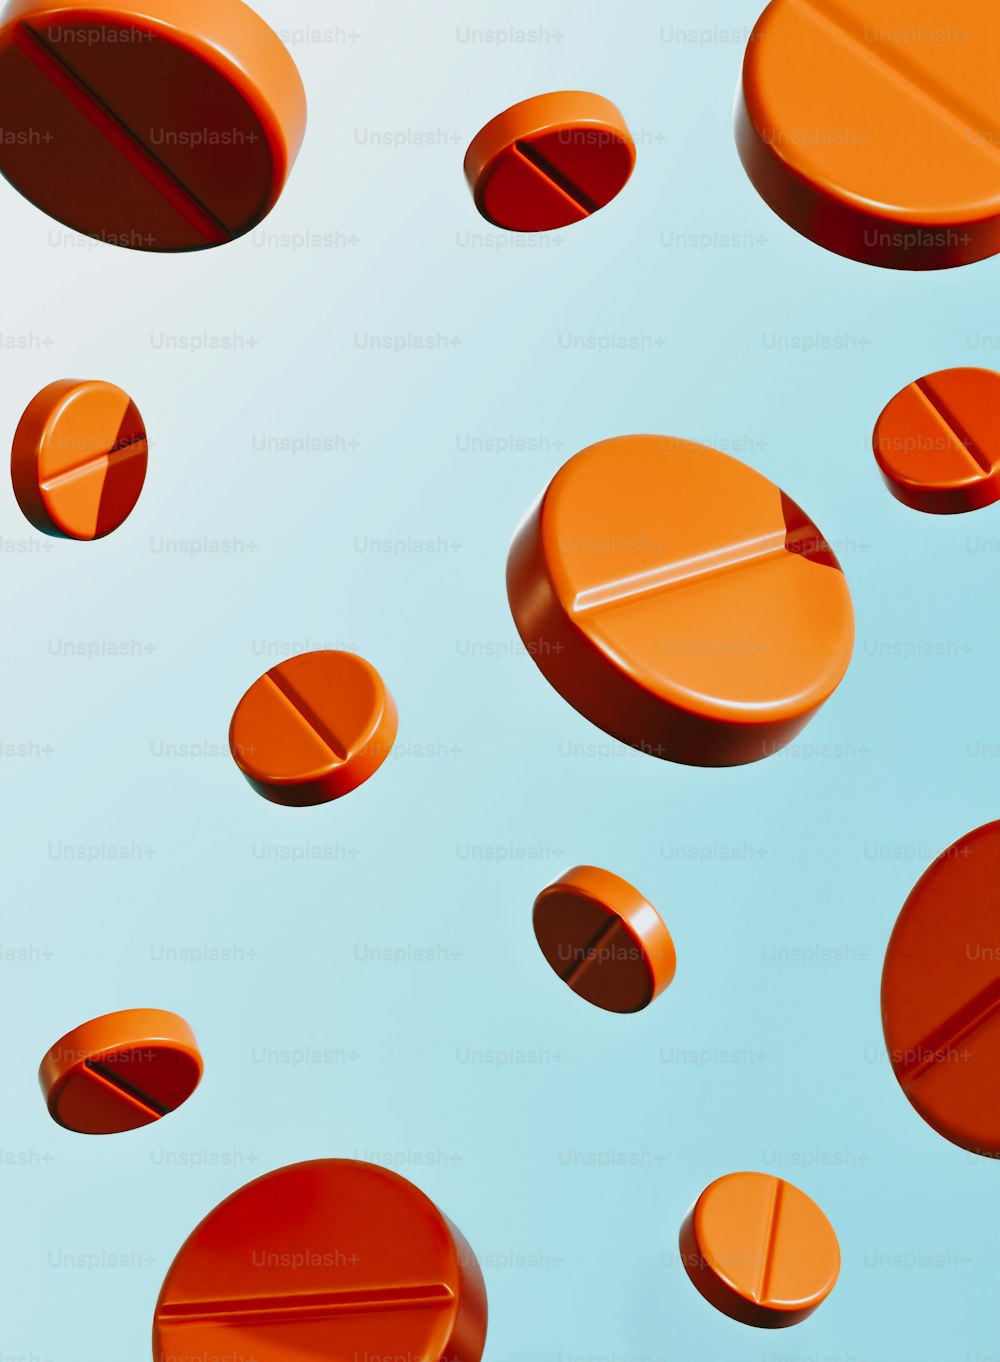 Un gruppo di pillole arancioni sedute sopra una superficie blu